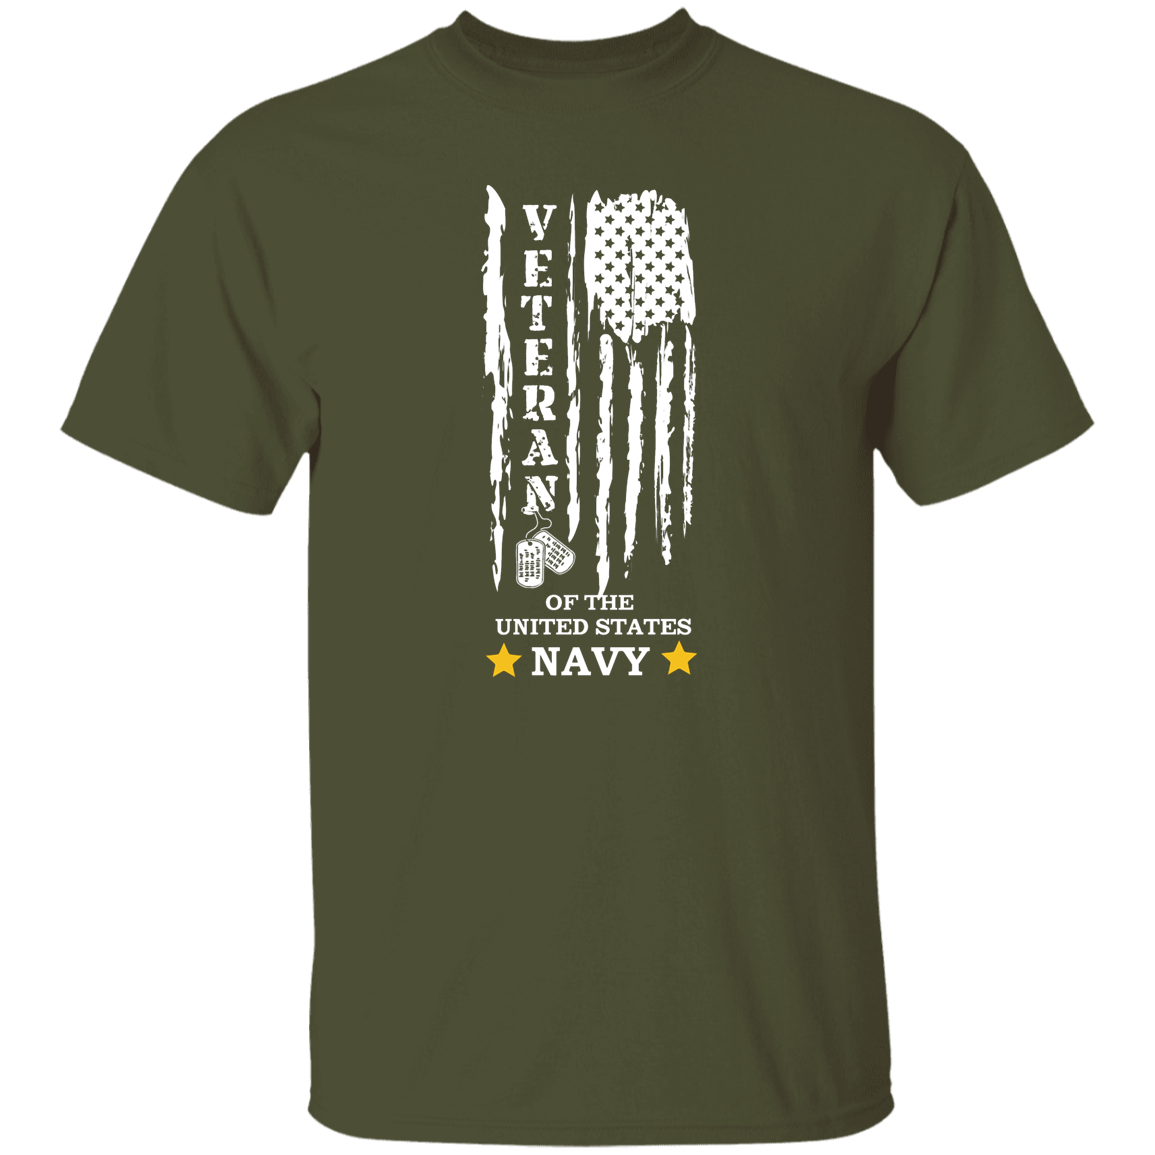 VETERAN of NAVY 5.3 oz. T-Shirt